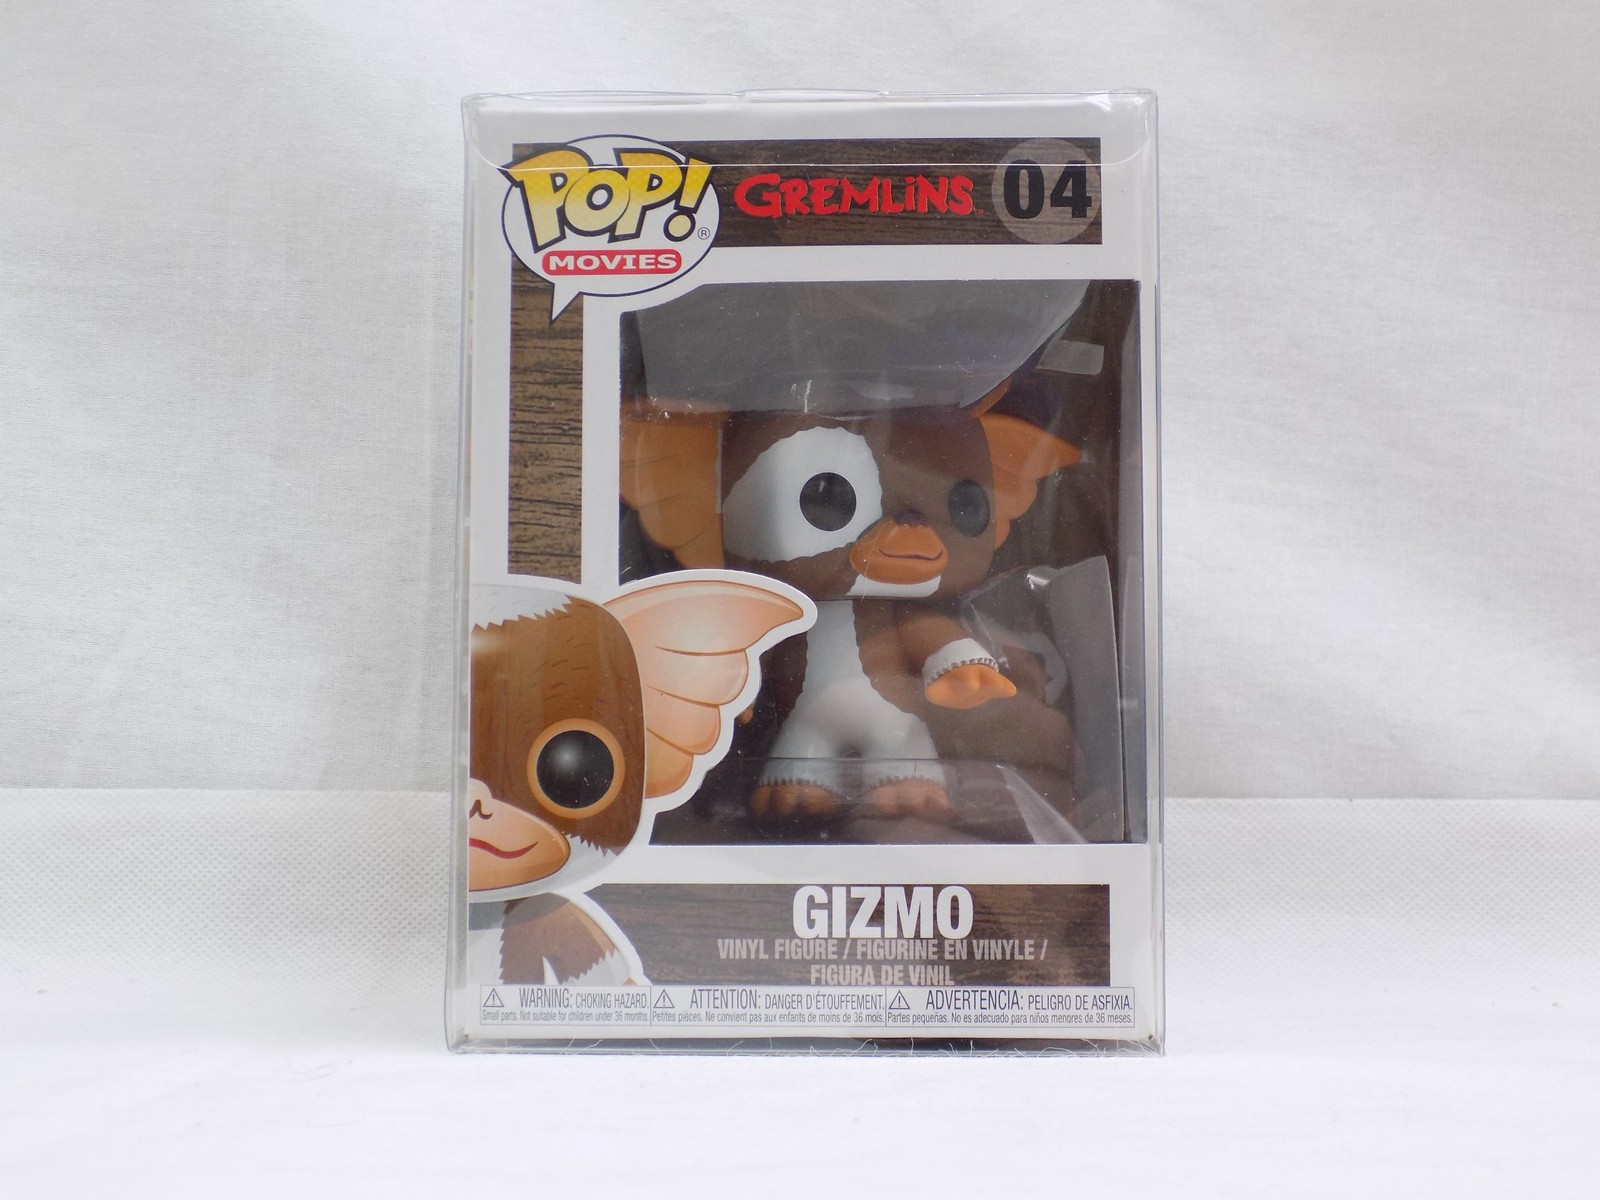 Brand New Funko Pop Gremlins Gizmo 04 Vinyl Figure - Starboard Games